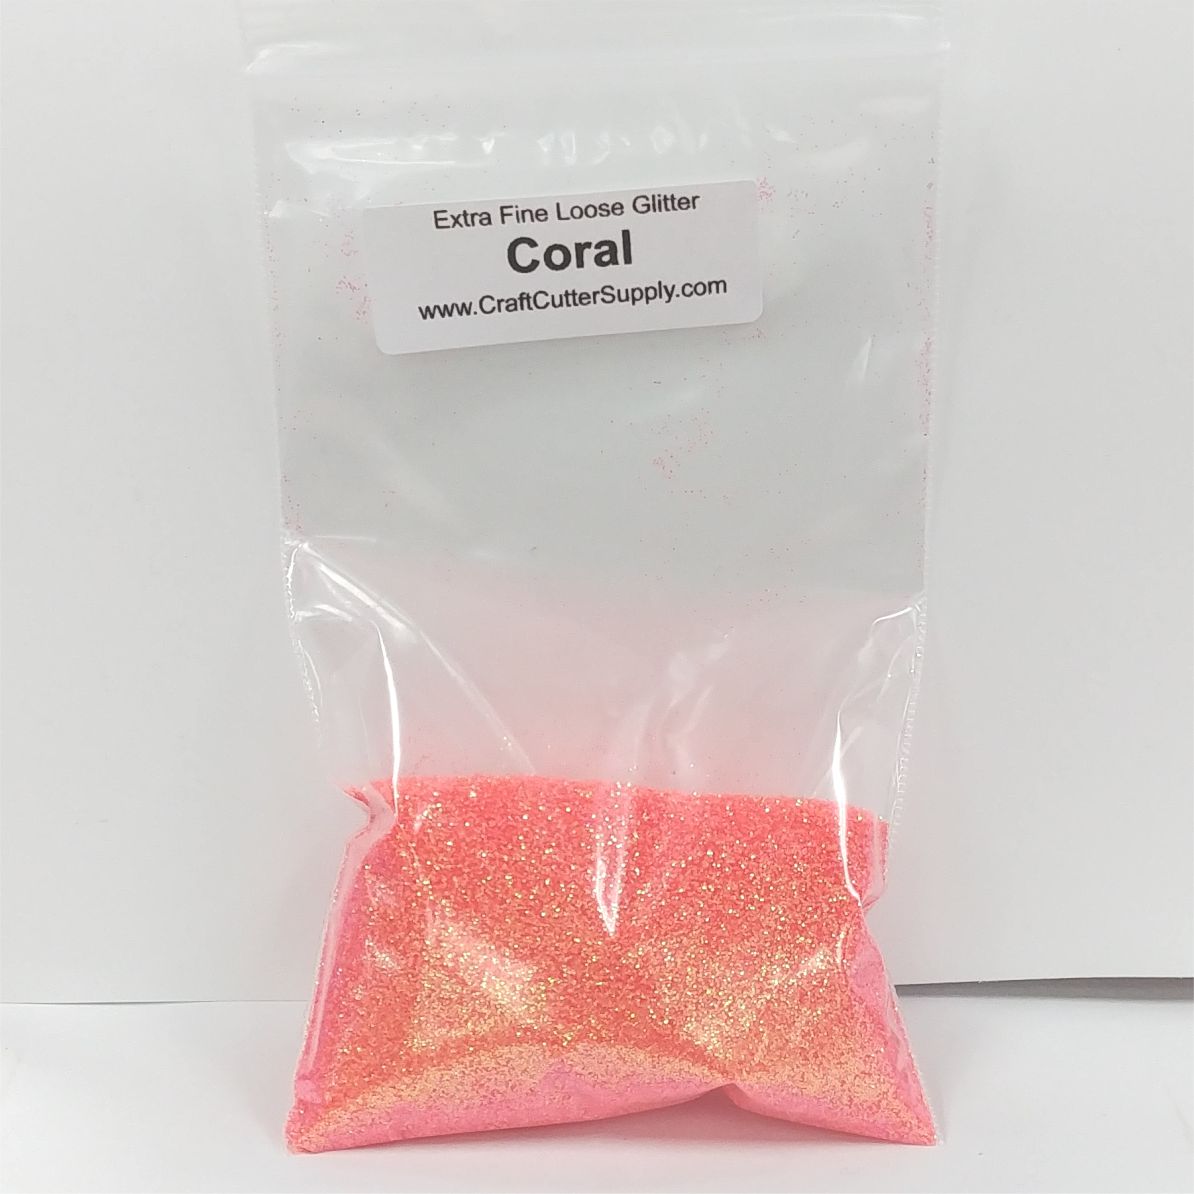 Extra Fine Loose Glitter 1oz Bag-Coral